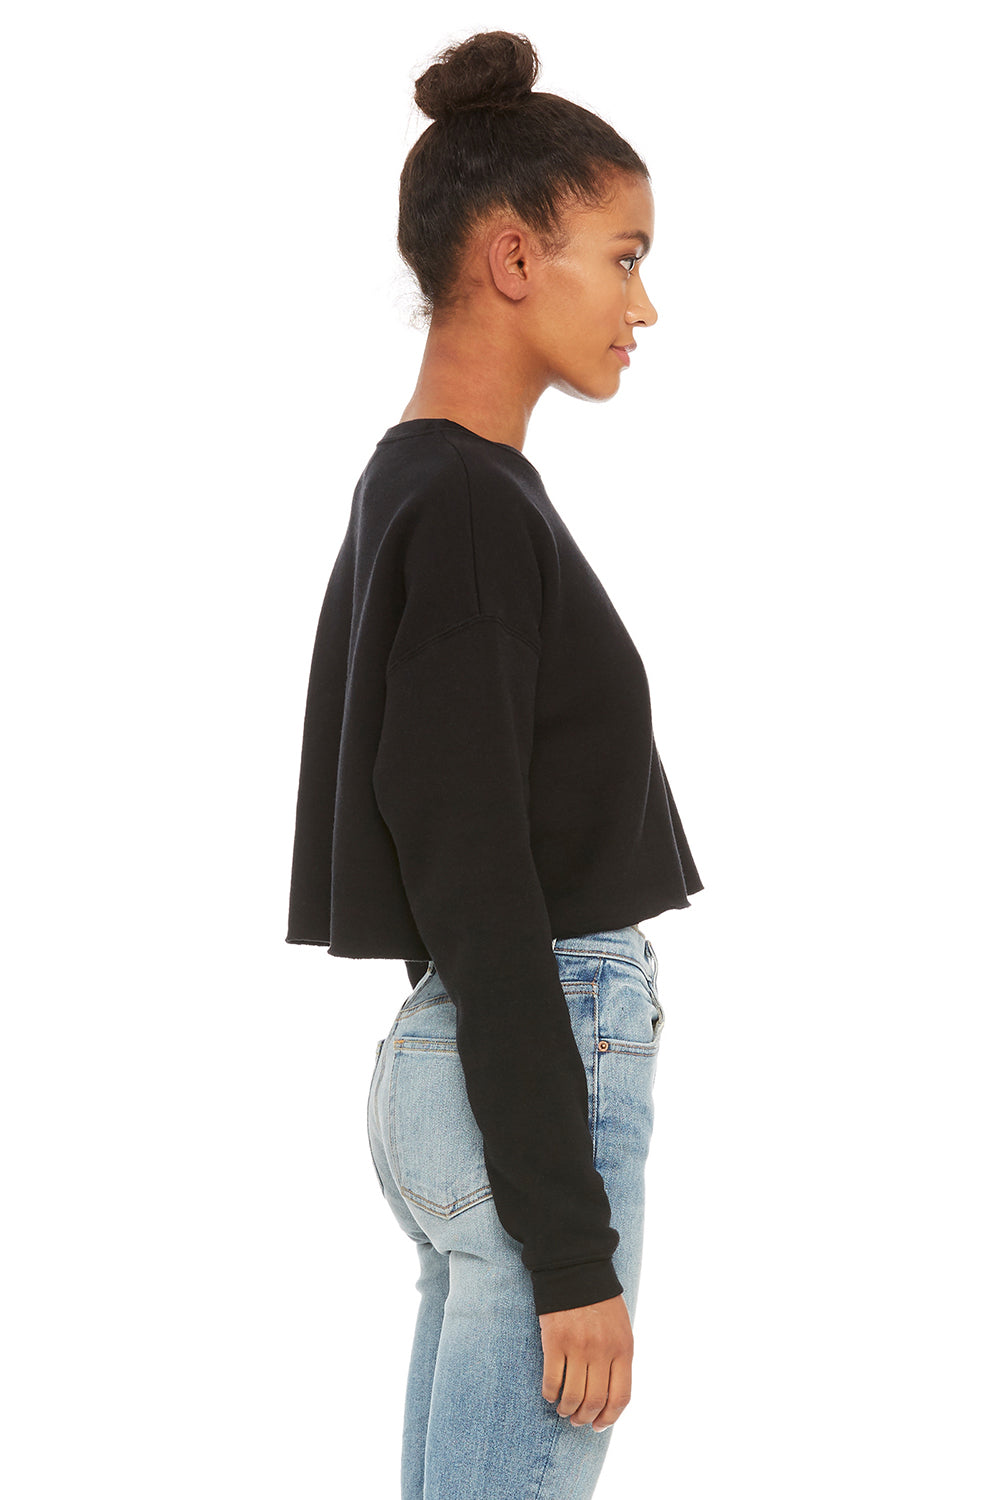 Bella + Canvas B7503/7503 Womens Cropped Fleece Crewneck Sweatshirt Black Model Side